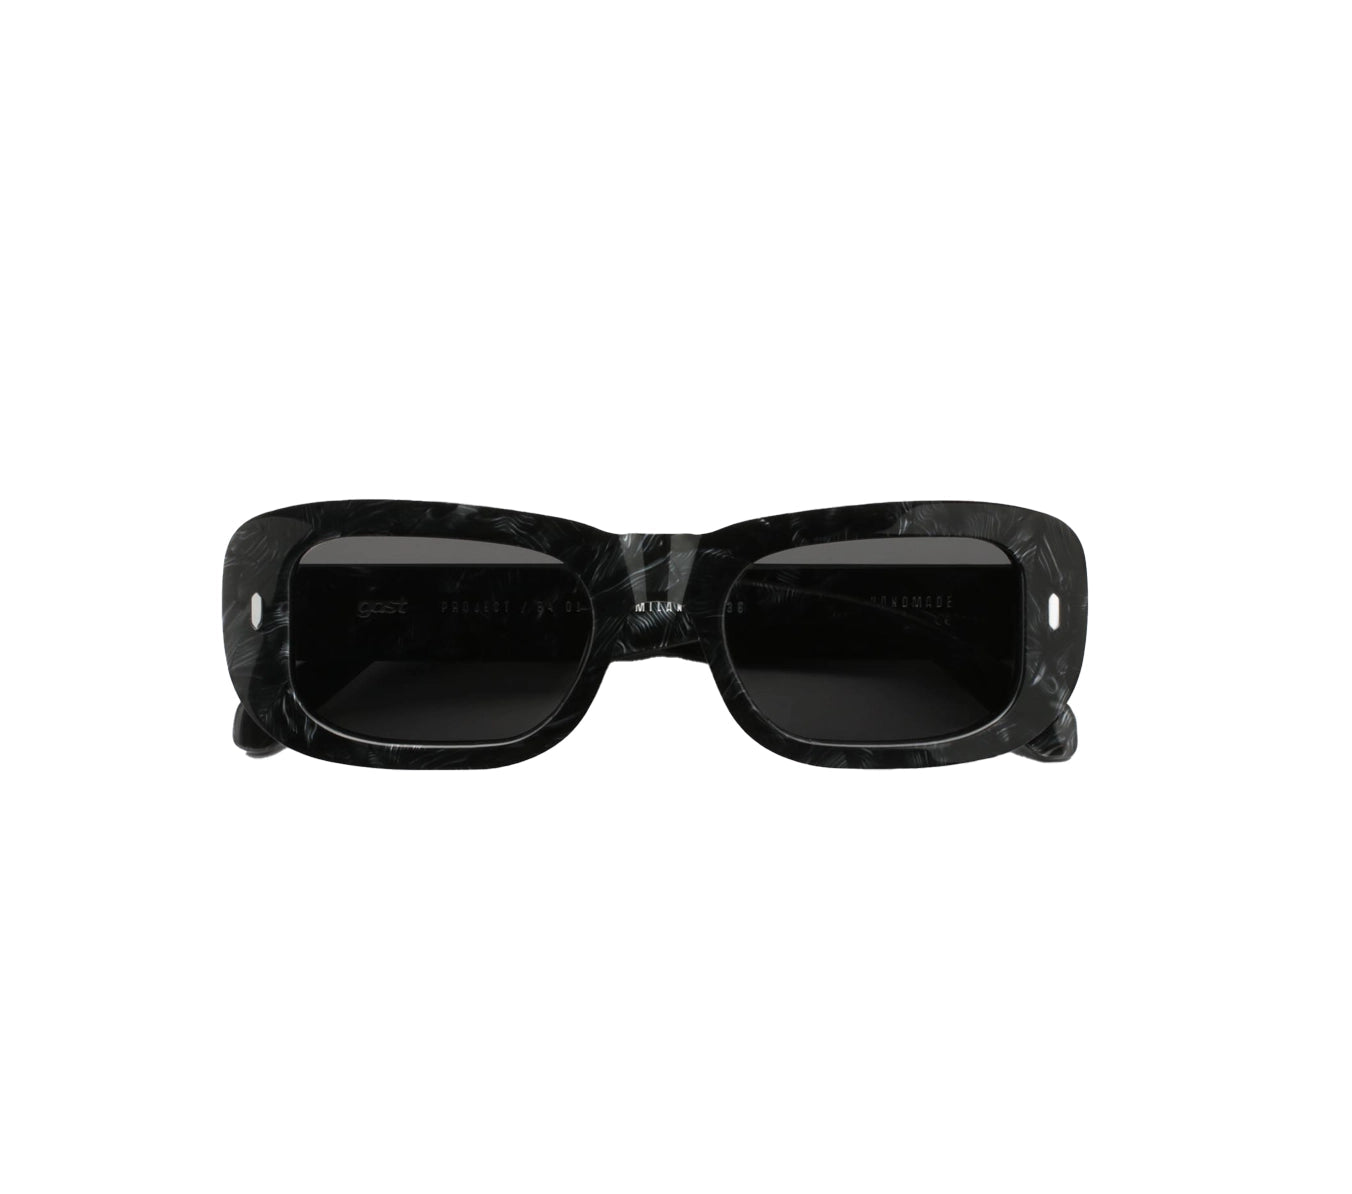 Gast Last Crush - Black Pearl - One size - Sunglasses